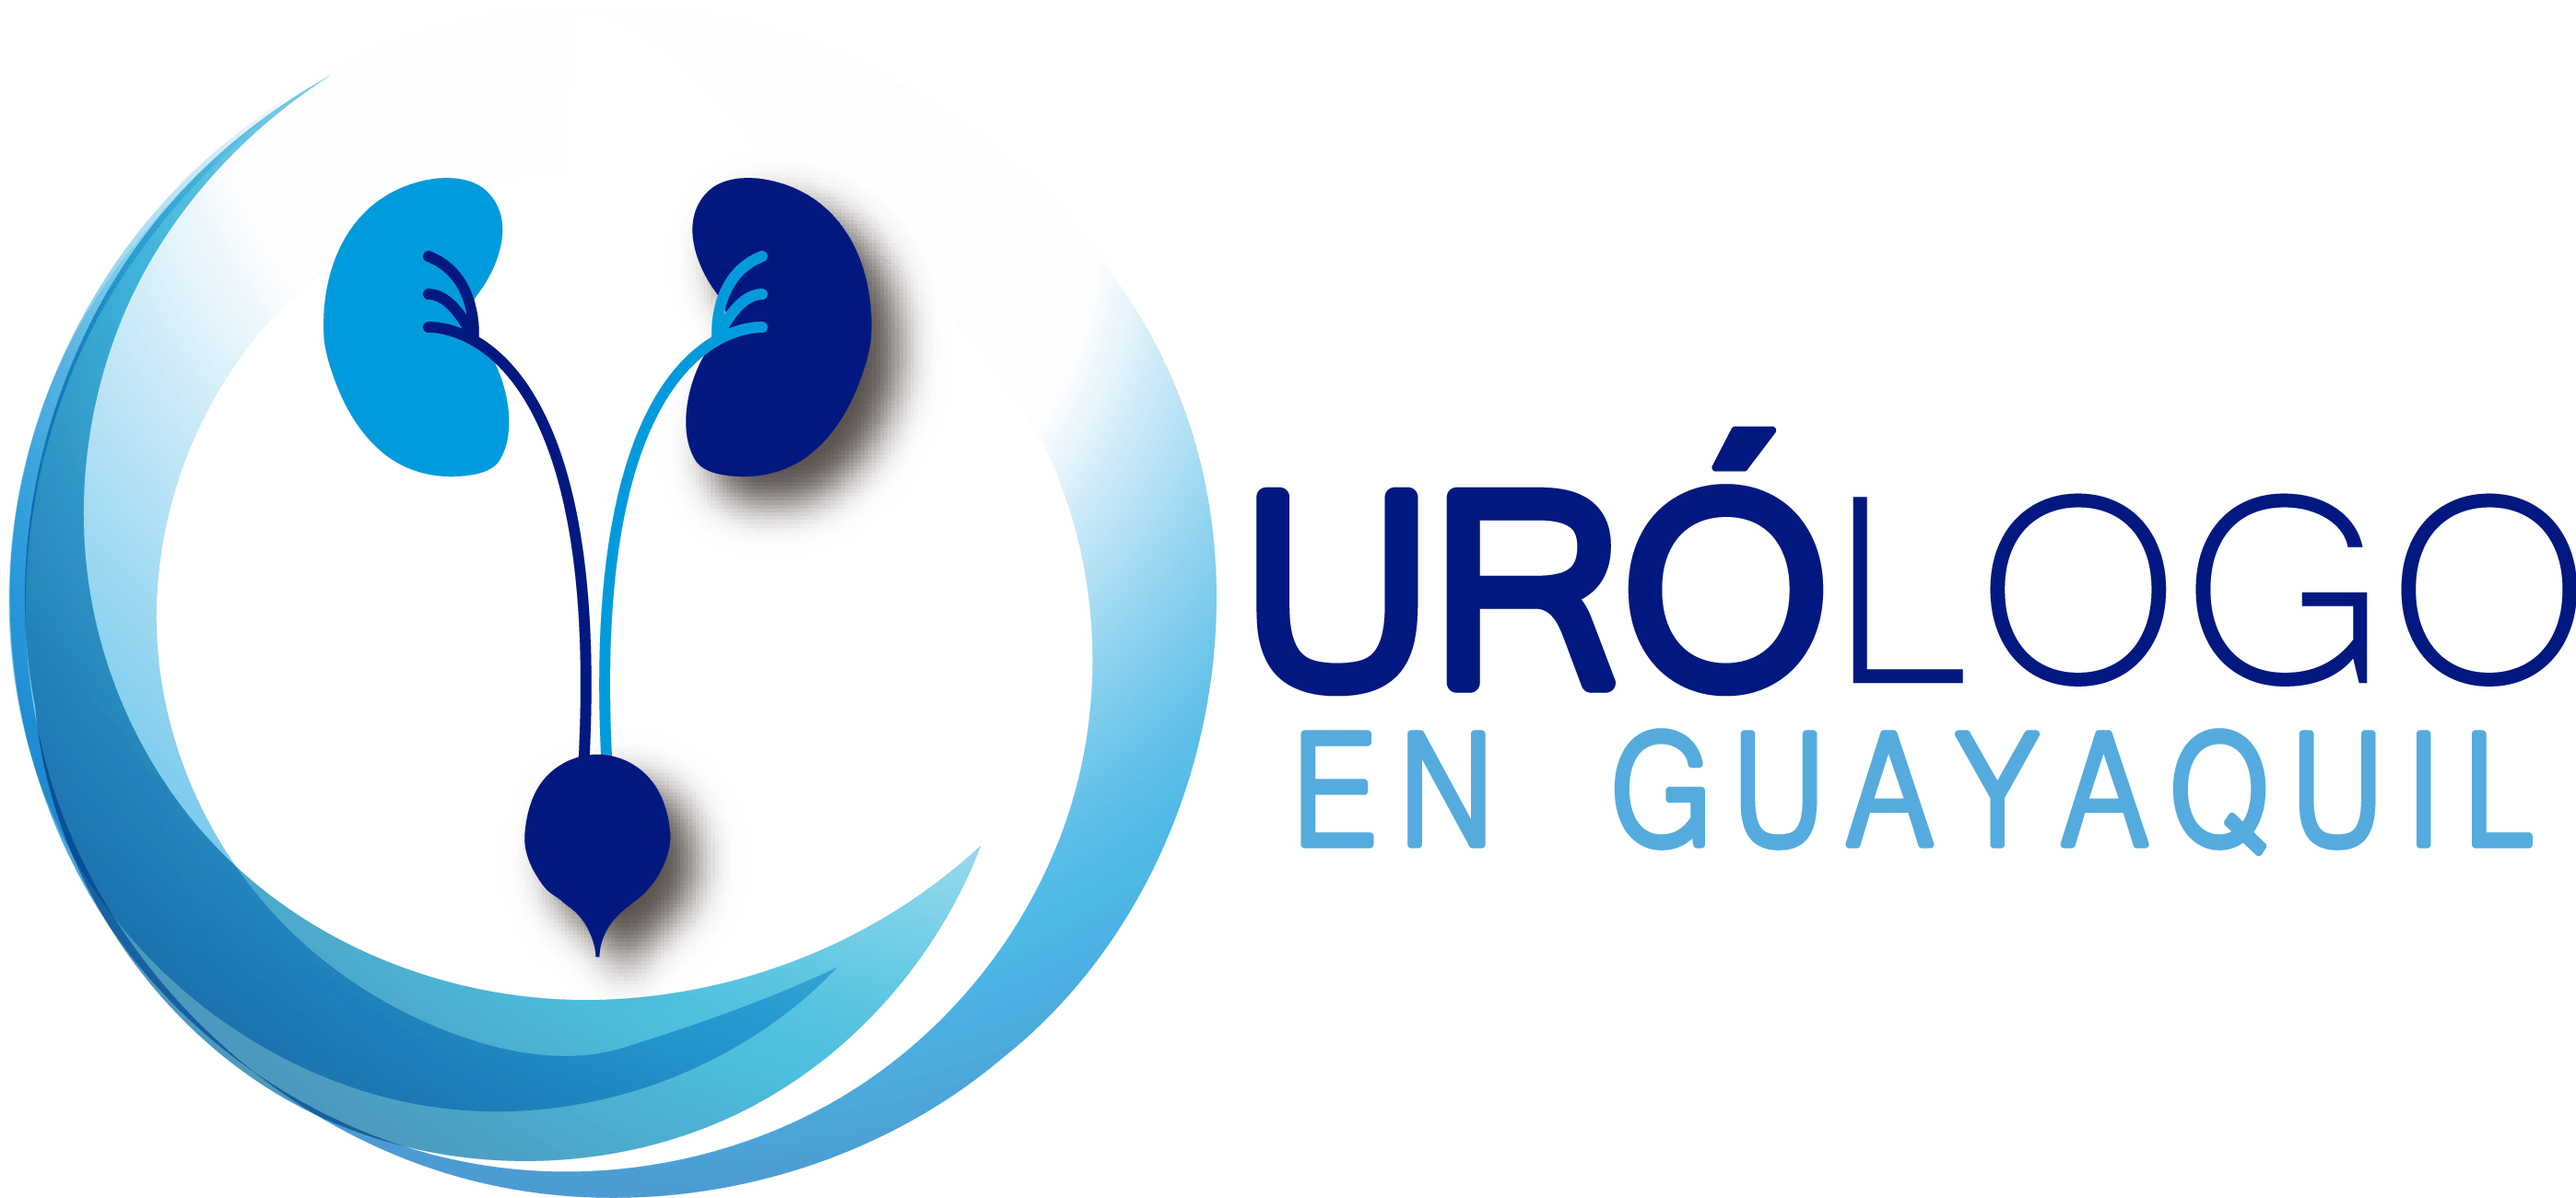 Urólogo en Guayaquil